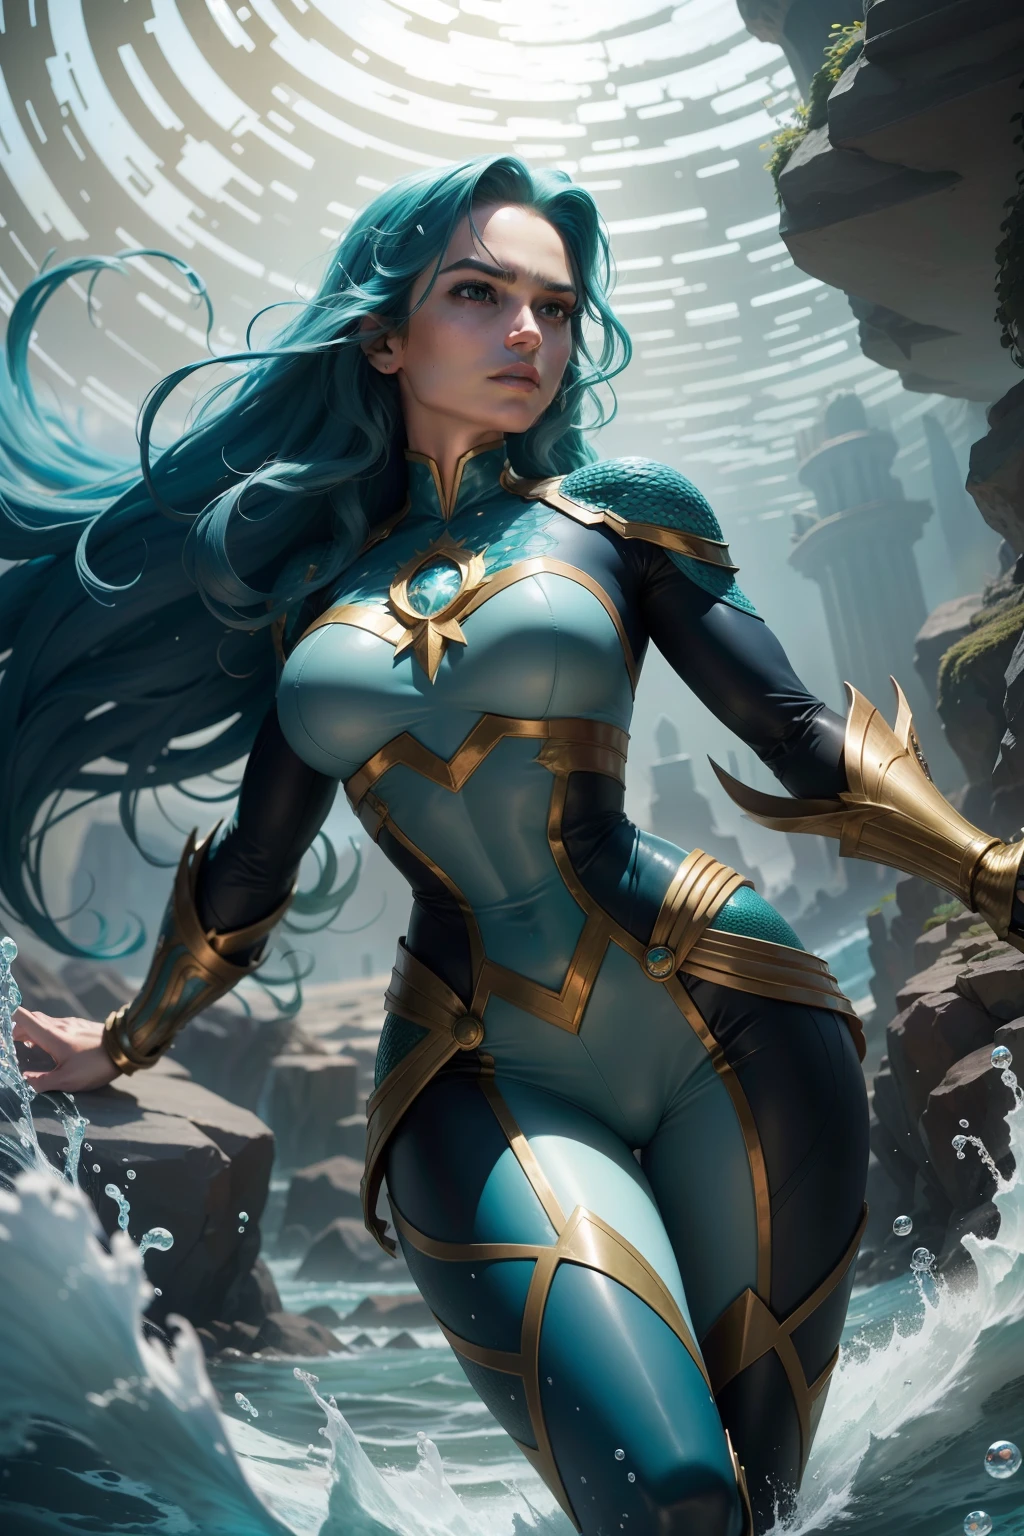 Mera 是 DC 漫画人物，被称为 Xebel 女王和 Aquaman 的妻子. 她是一位拥有操纵水的能力的亚特兰蒂斯人, 让她能够创造水生结构并控制海流. 她的性格以对海王及其人民的决心和忠诚为特征. Mera 经常参与 DC 的水生宇宙事件, 与丈夫并肩作战，保护亚特兰蒂斯和海洋. 她的故事从寻求正义到统治泽贝尔, 为 DC 的海底神话增添深度.